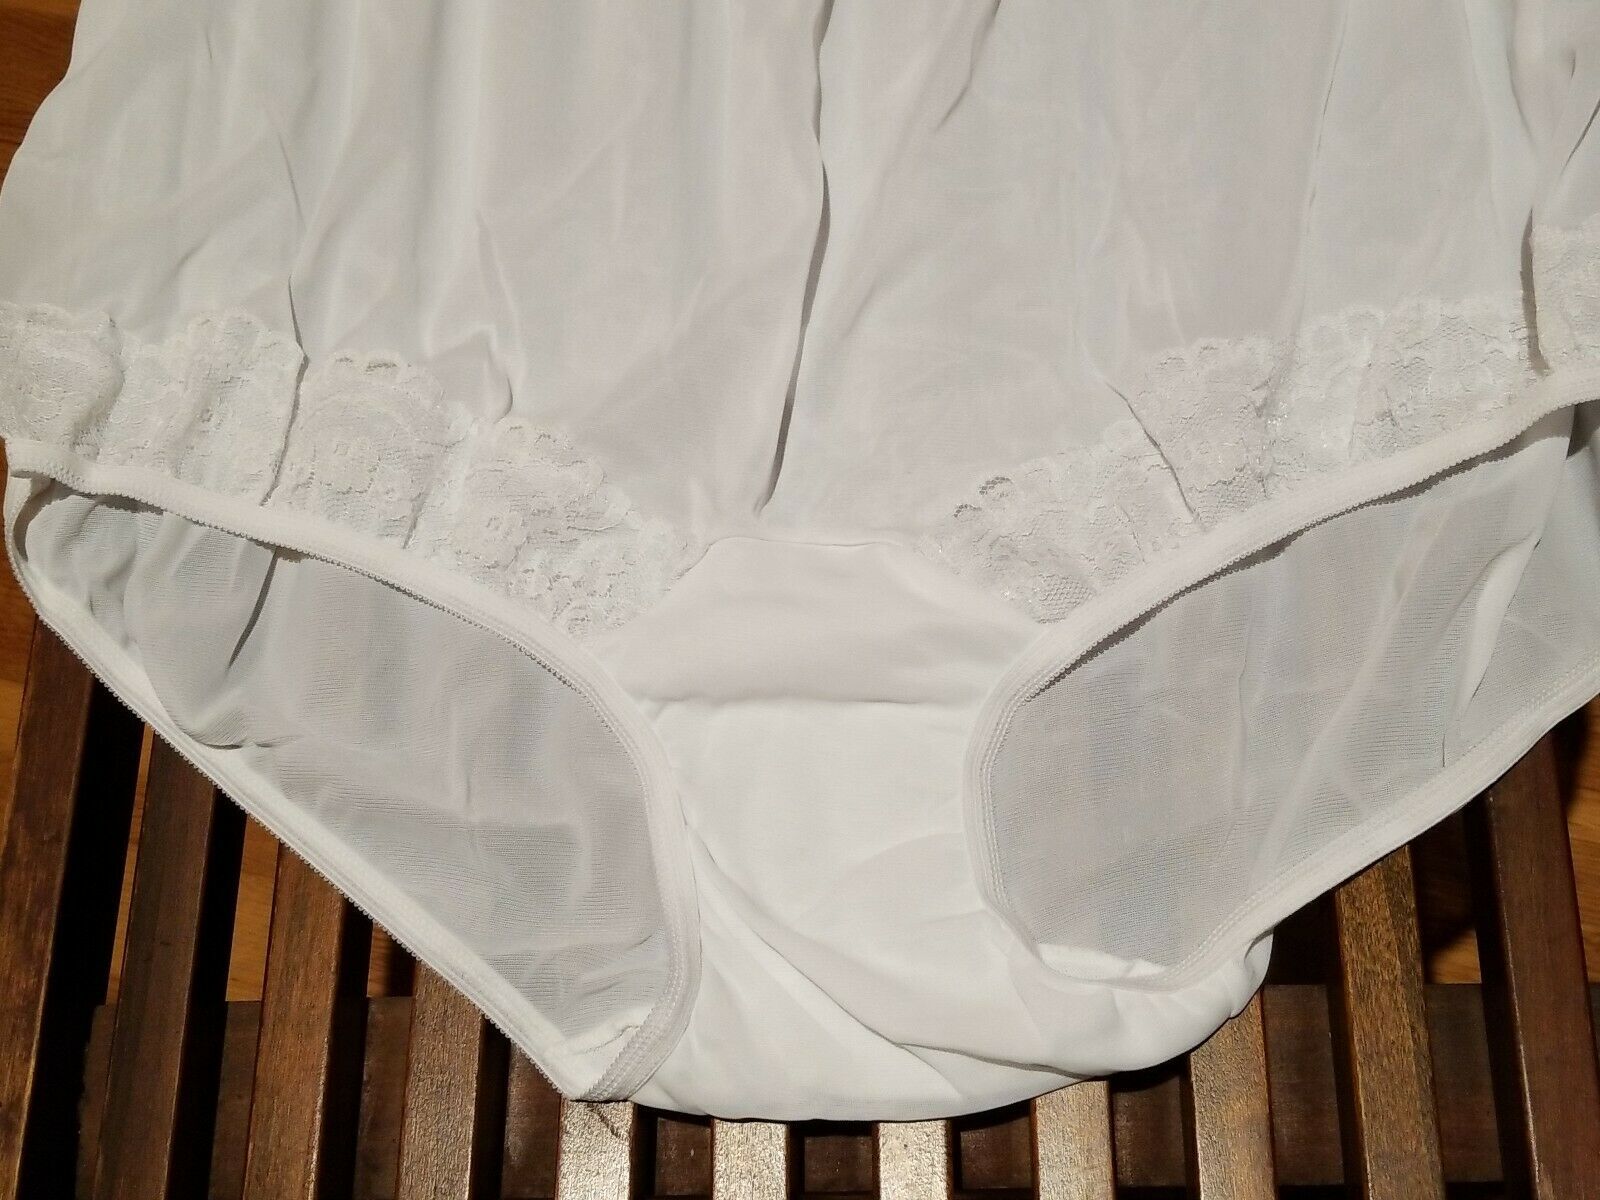 Dixie Belle White Nylon See Through Lacey Panties 1232 Size 13 Fits ...